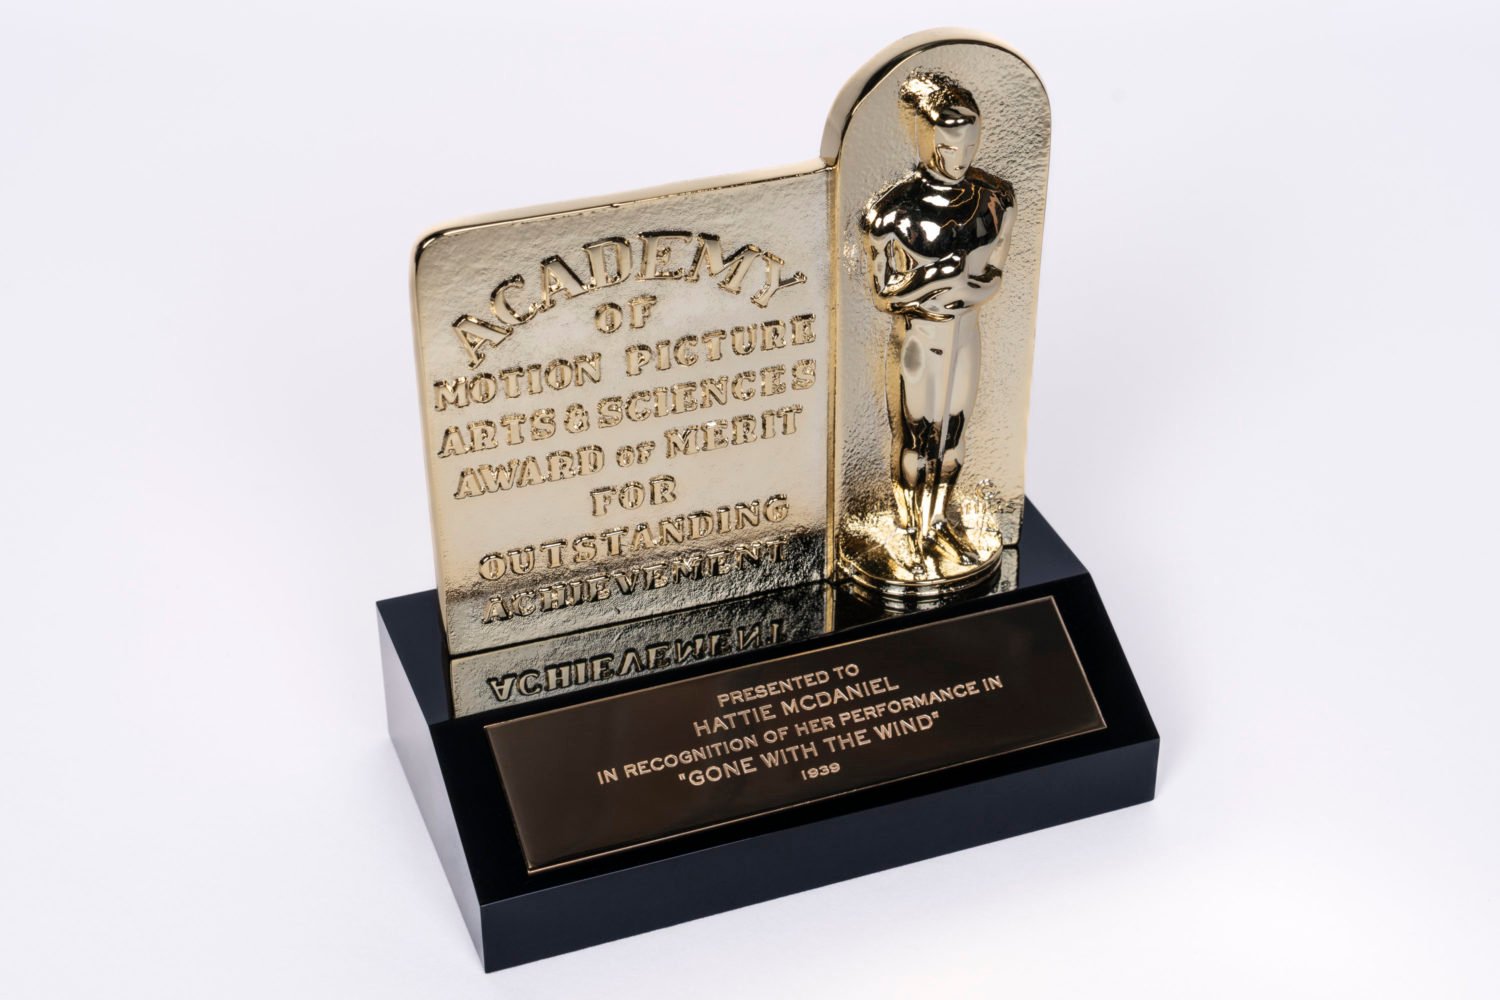 A reproduction of the original plaque of Hattie McDaniels Academy Award. Photo by Owen Kolasinski.